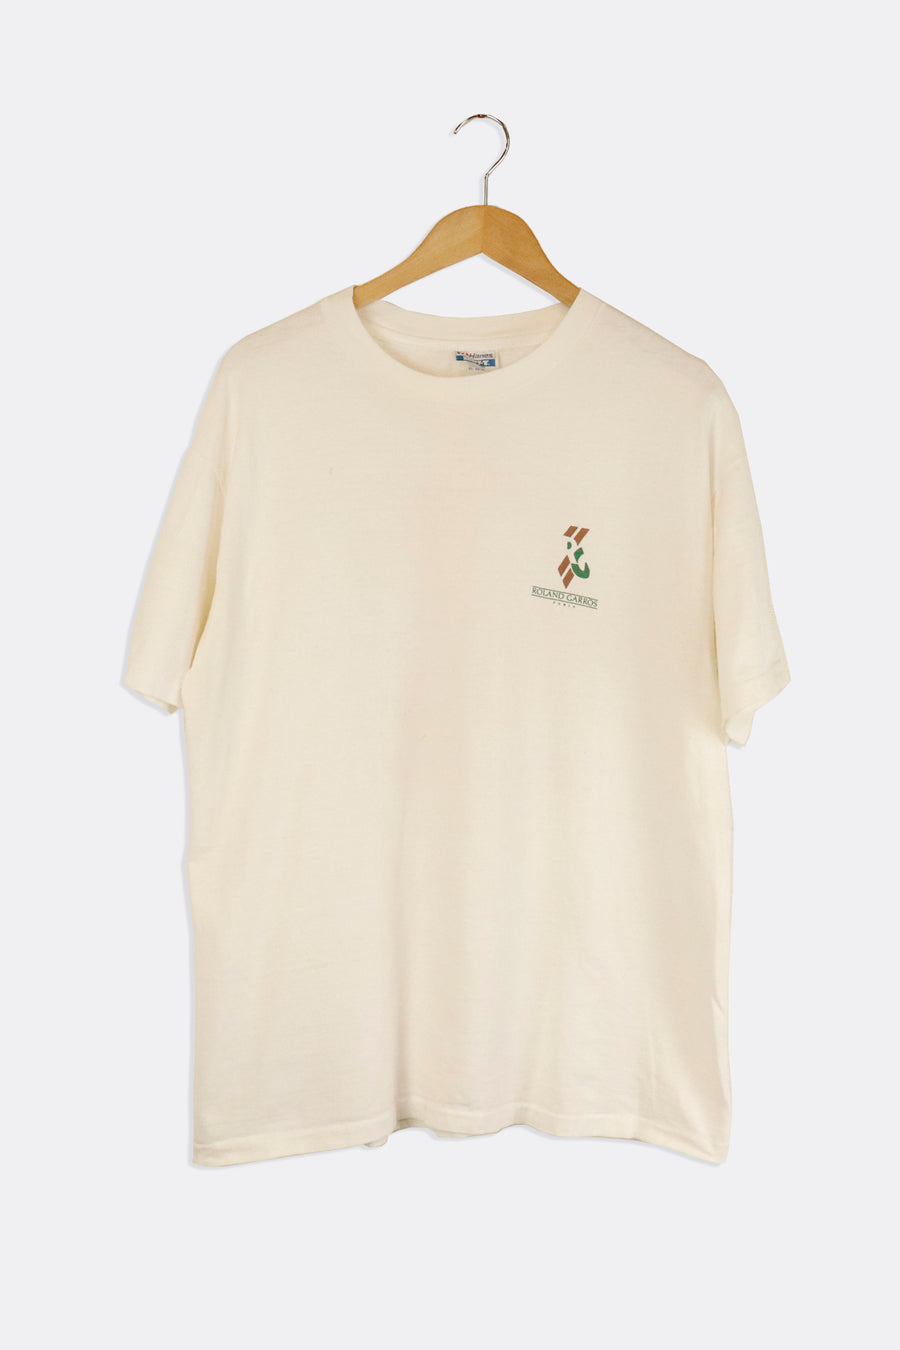 Vintage 1990 Roland Garros Paris Tennis Logo On Back T Shirt Sz XL